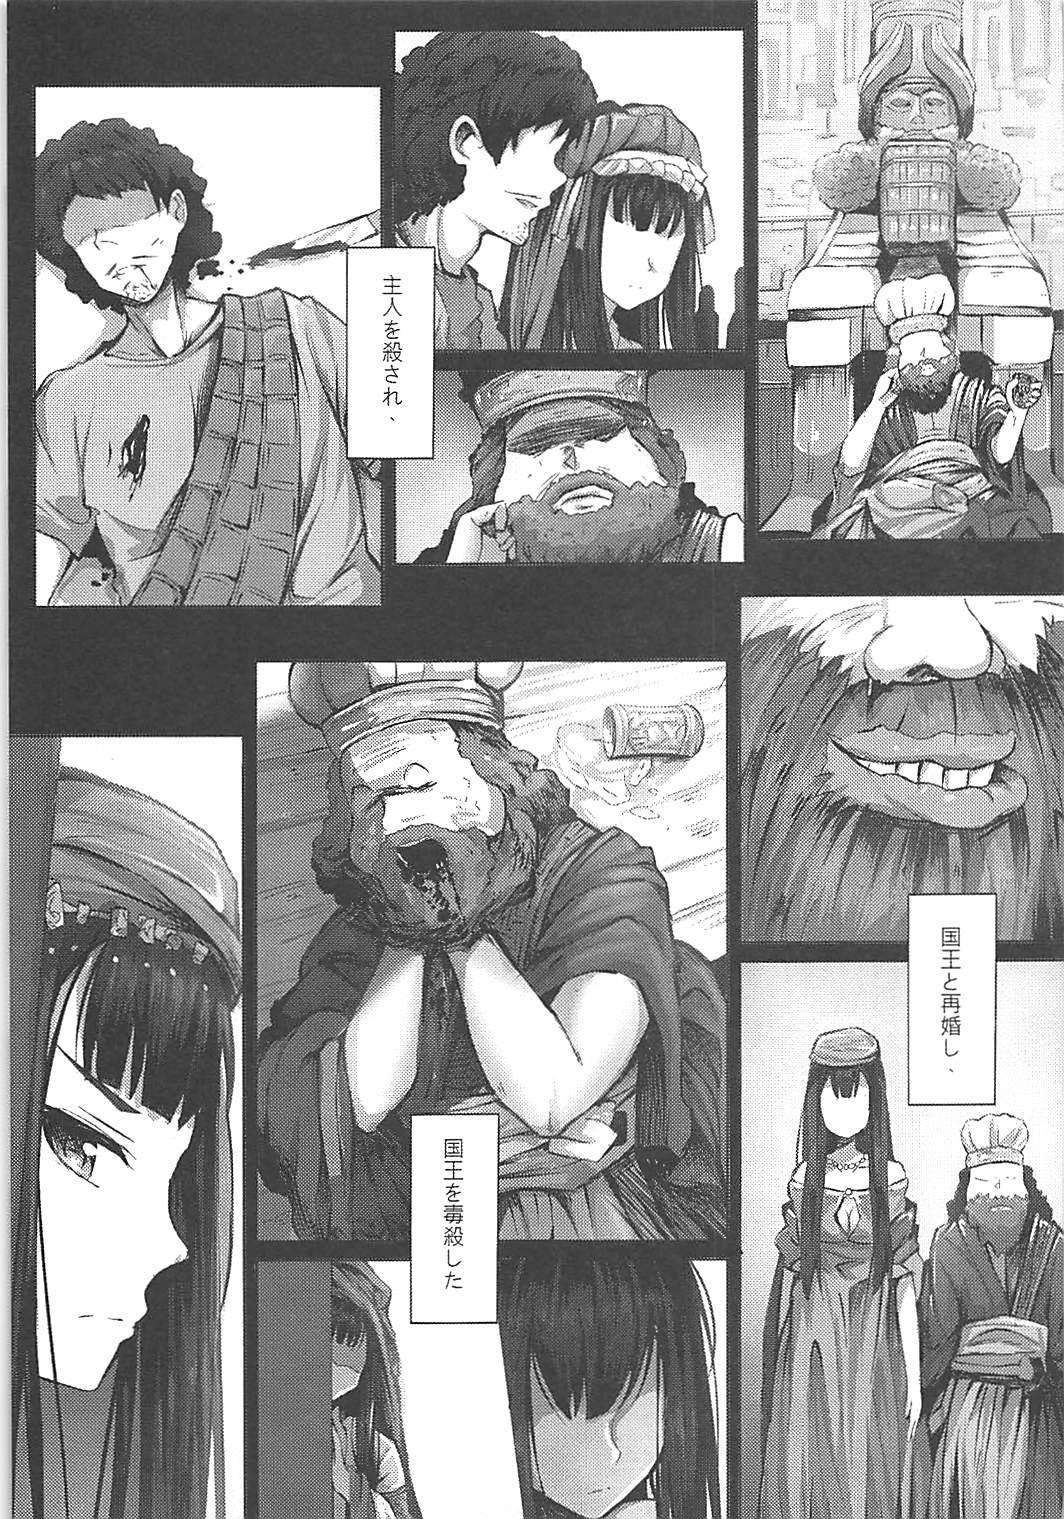 Vecina Jotei to Shinjitsu no Ai - Fate apocrypha Gloryholes - Page 9